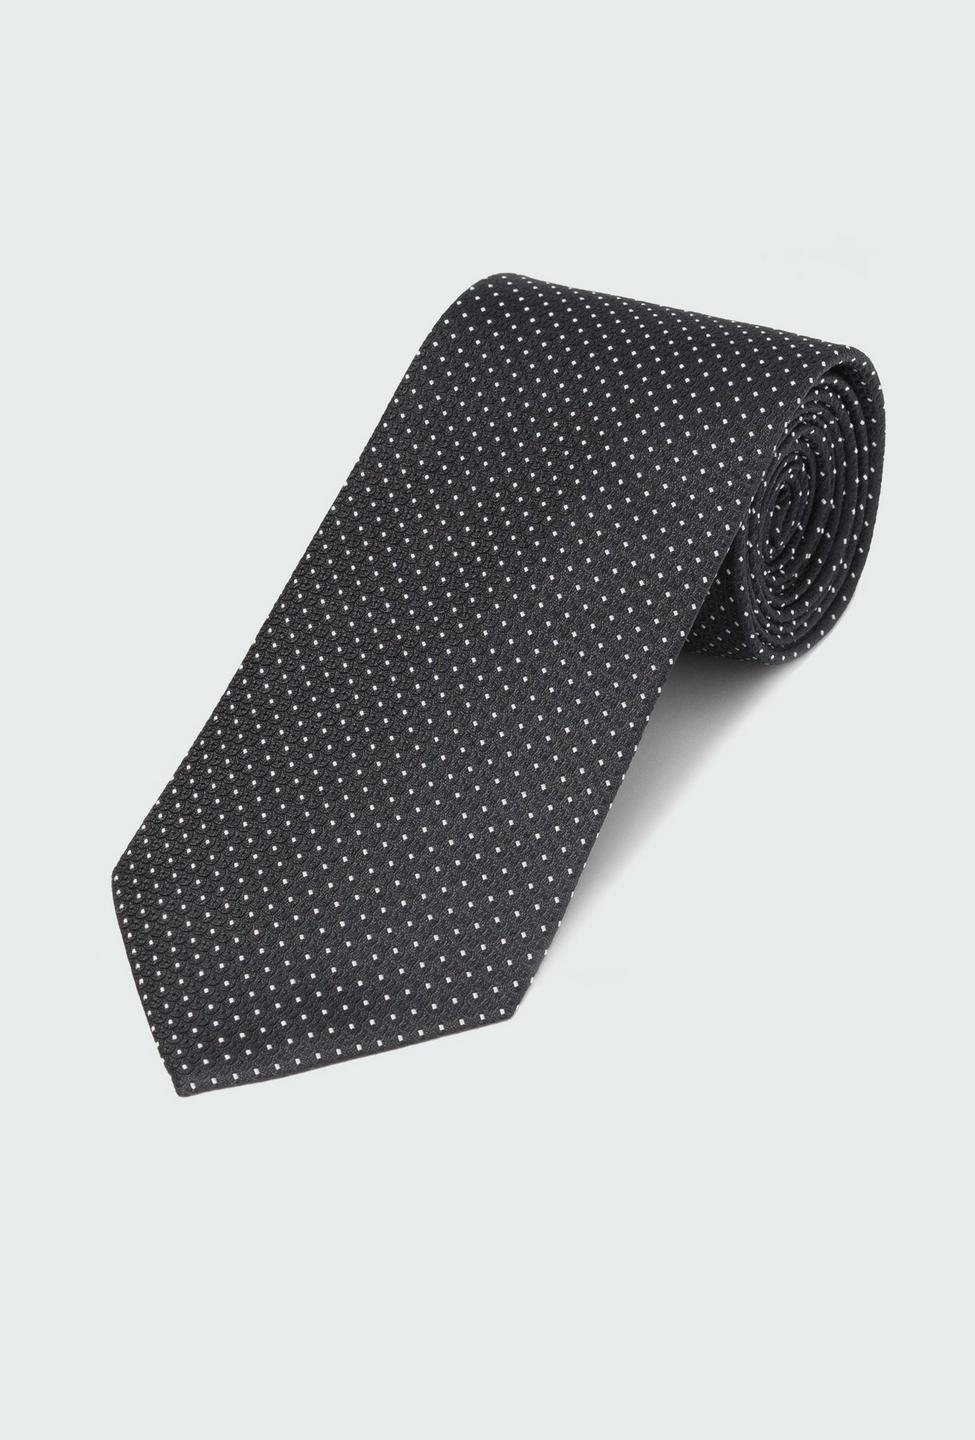 Black tie - Pattern Design from Premium Indochino Collection